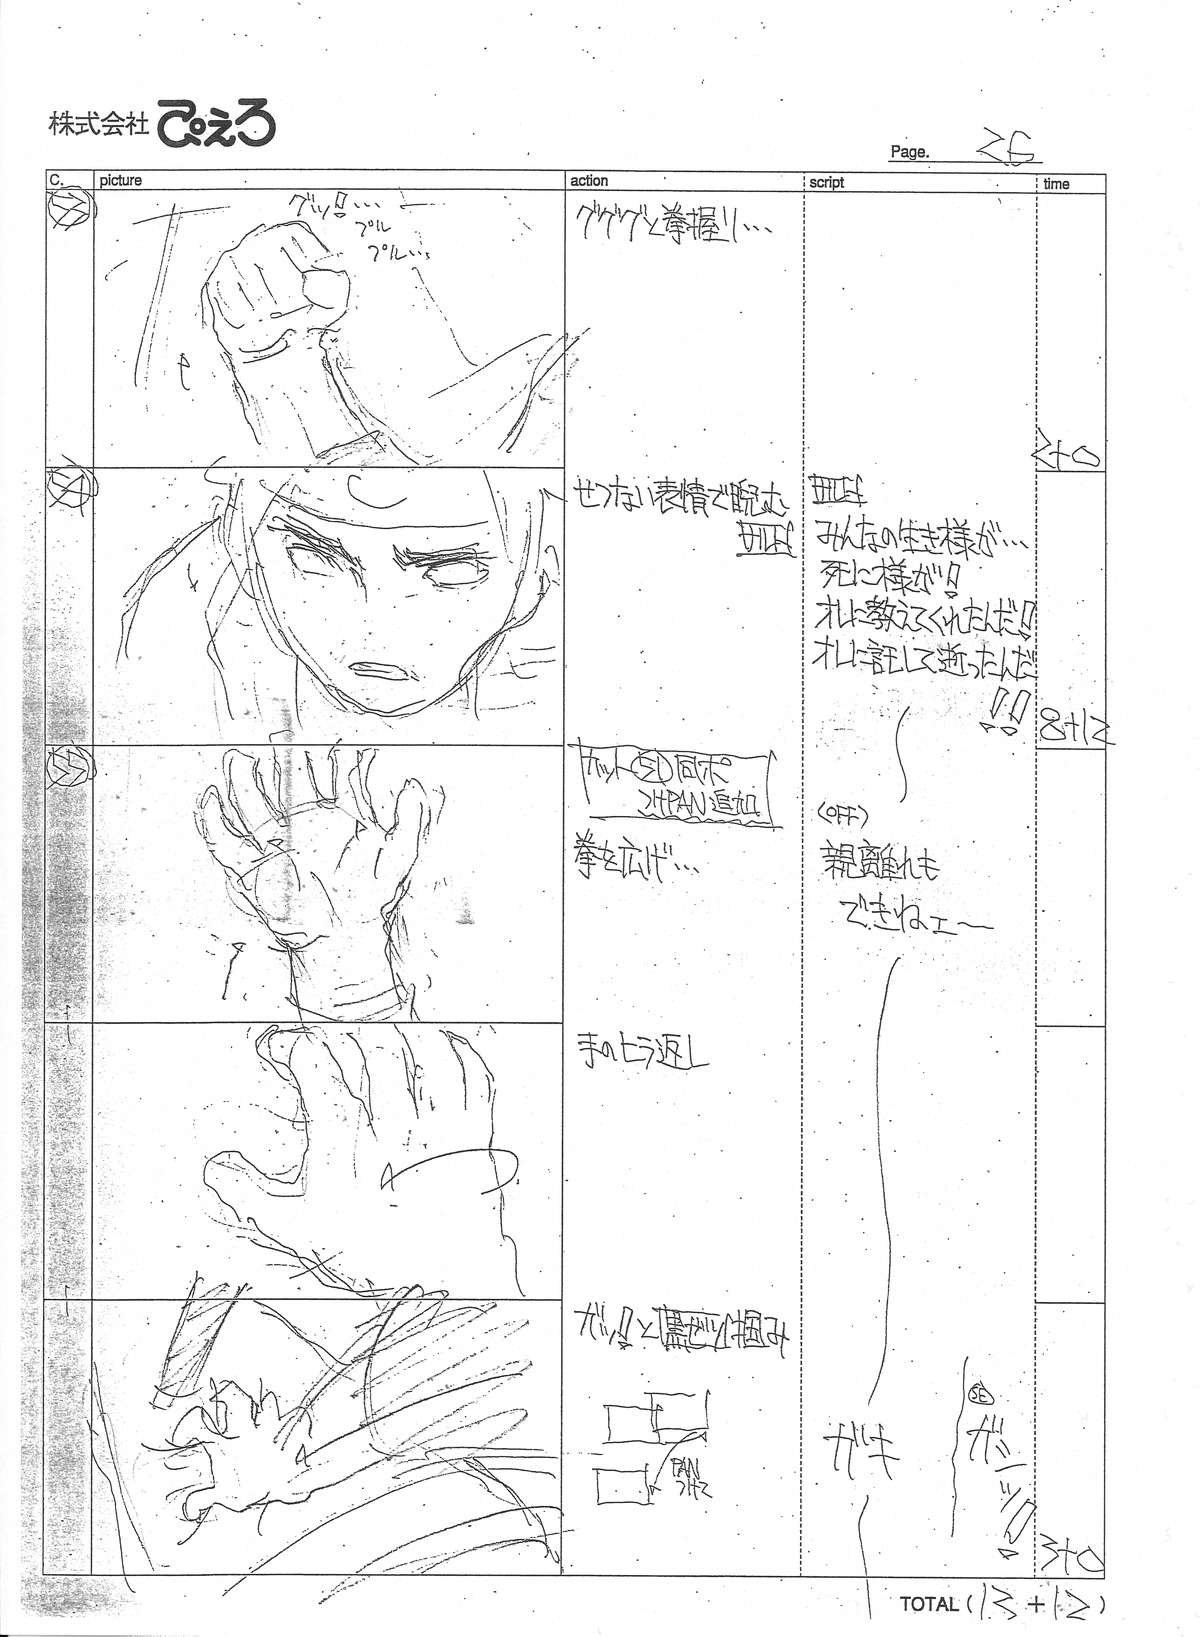 masahiko_murata naruto naruto_shippuuden production_materials storyboard